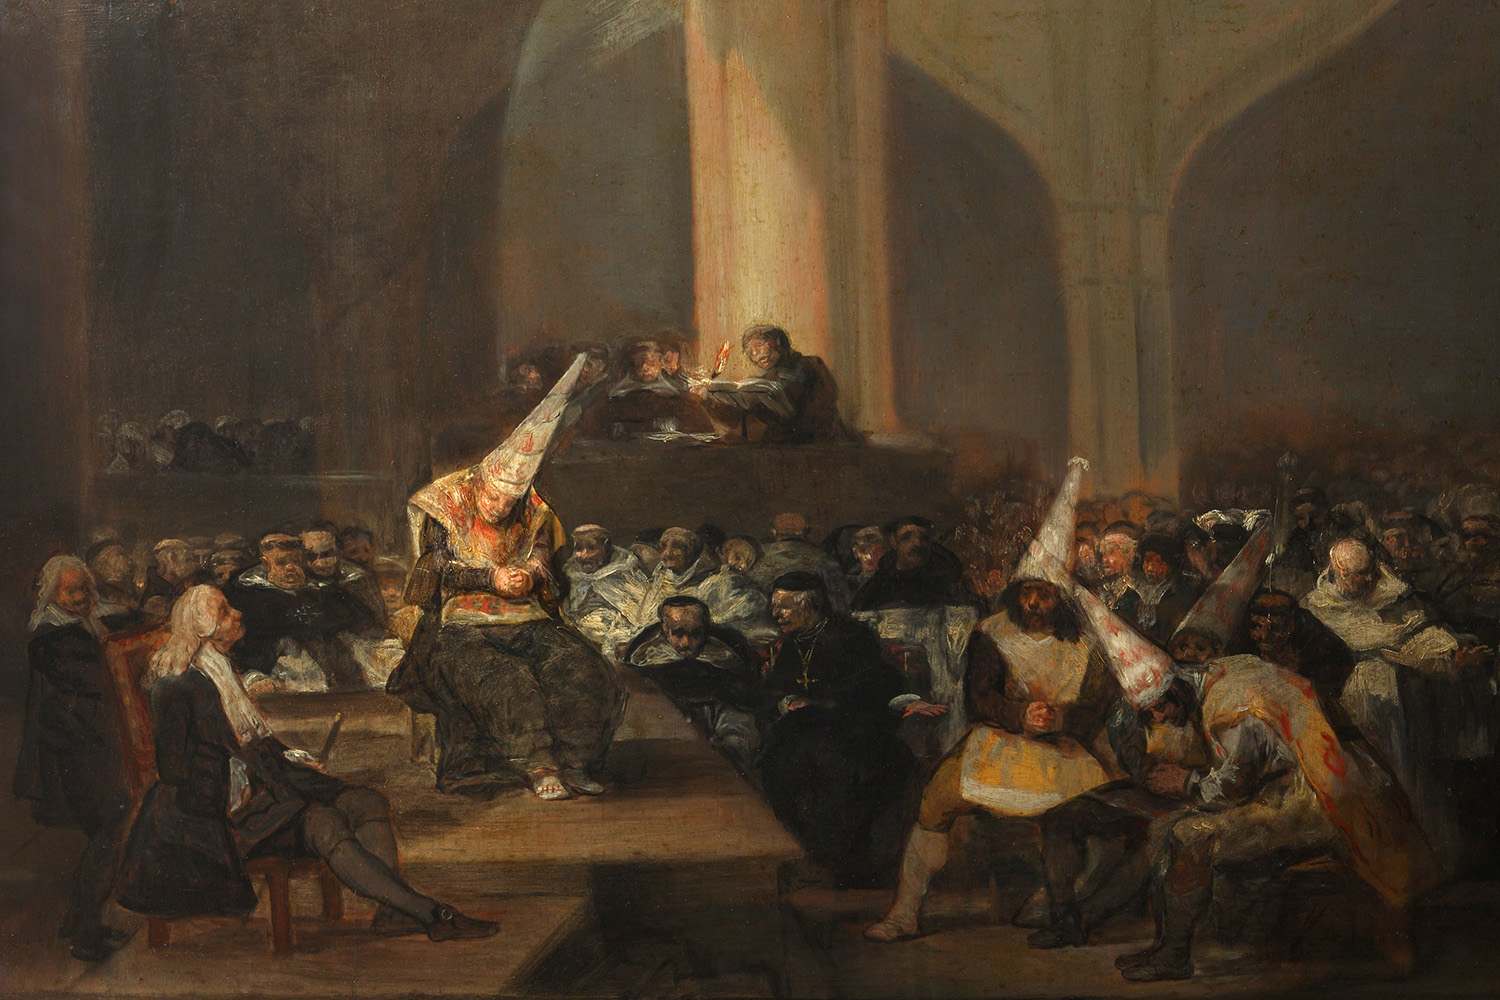 The Inquisition Tribunal by Francisco de Goya, c.1808-12.